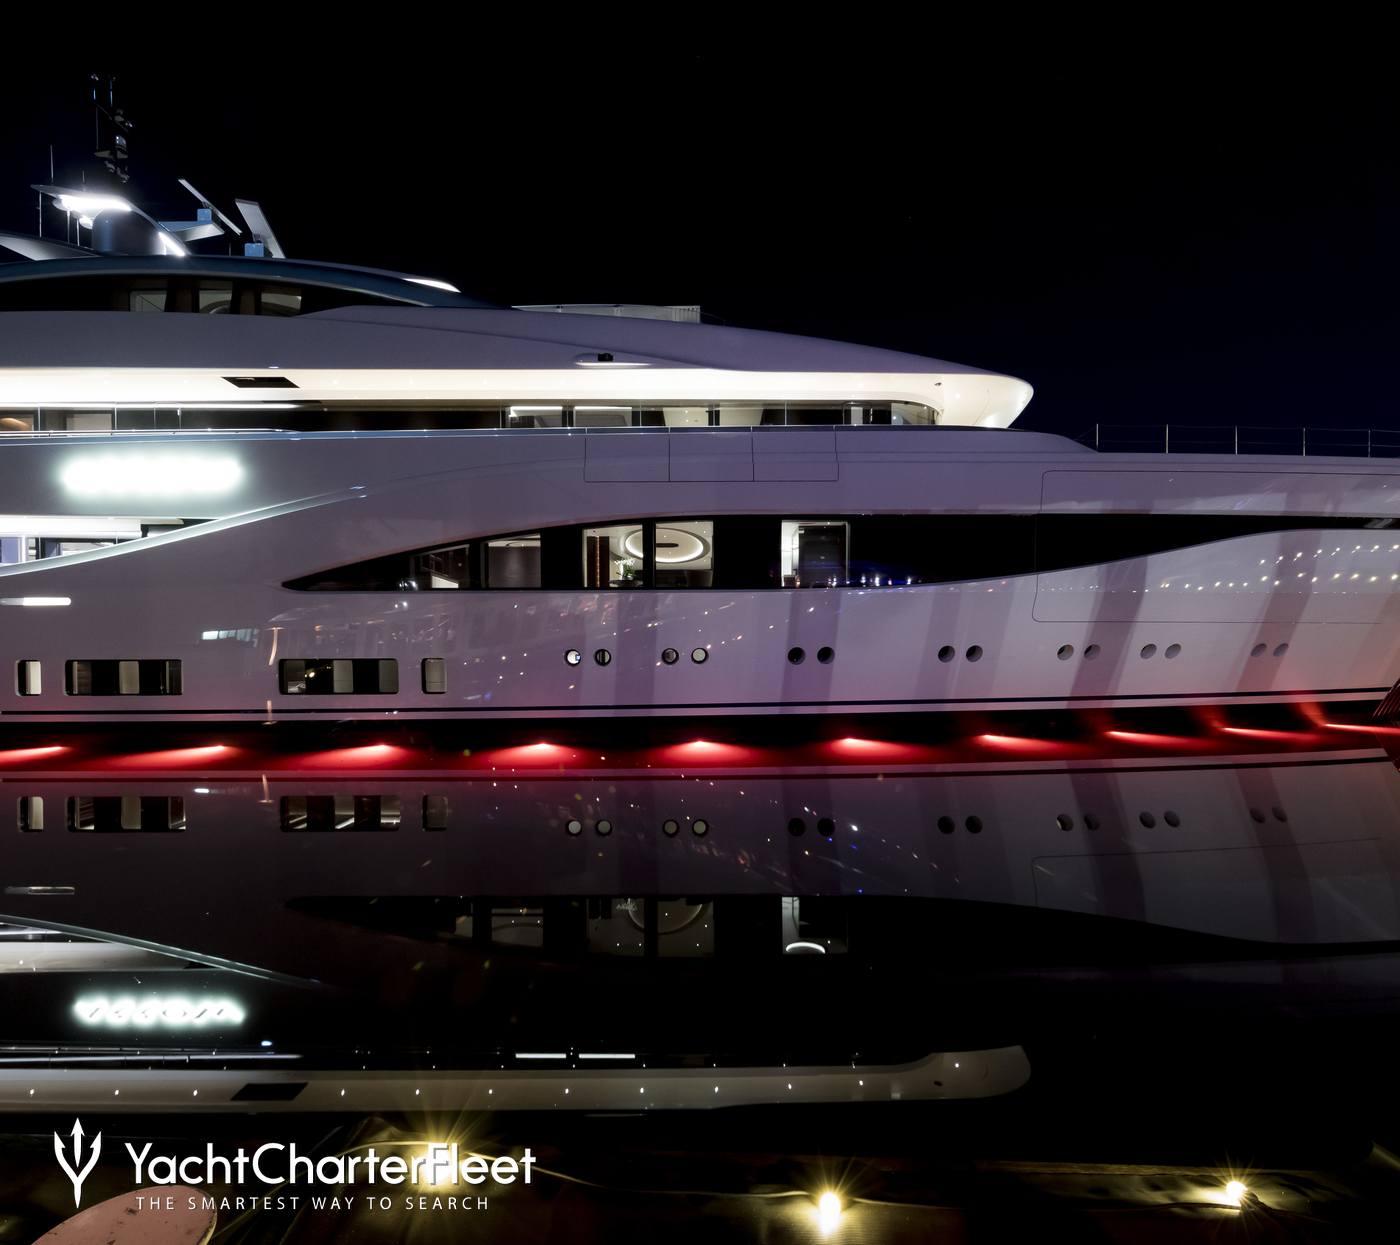 75m Feadship charter yacht ARROW makes a splash | YachtCharterFleet